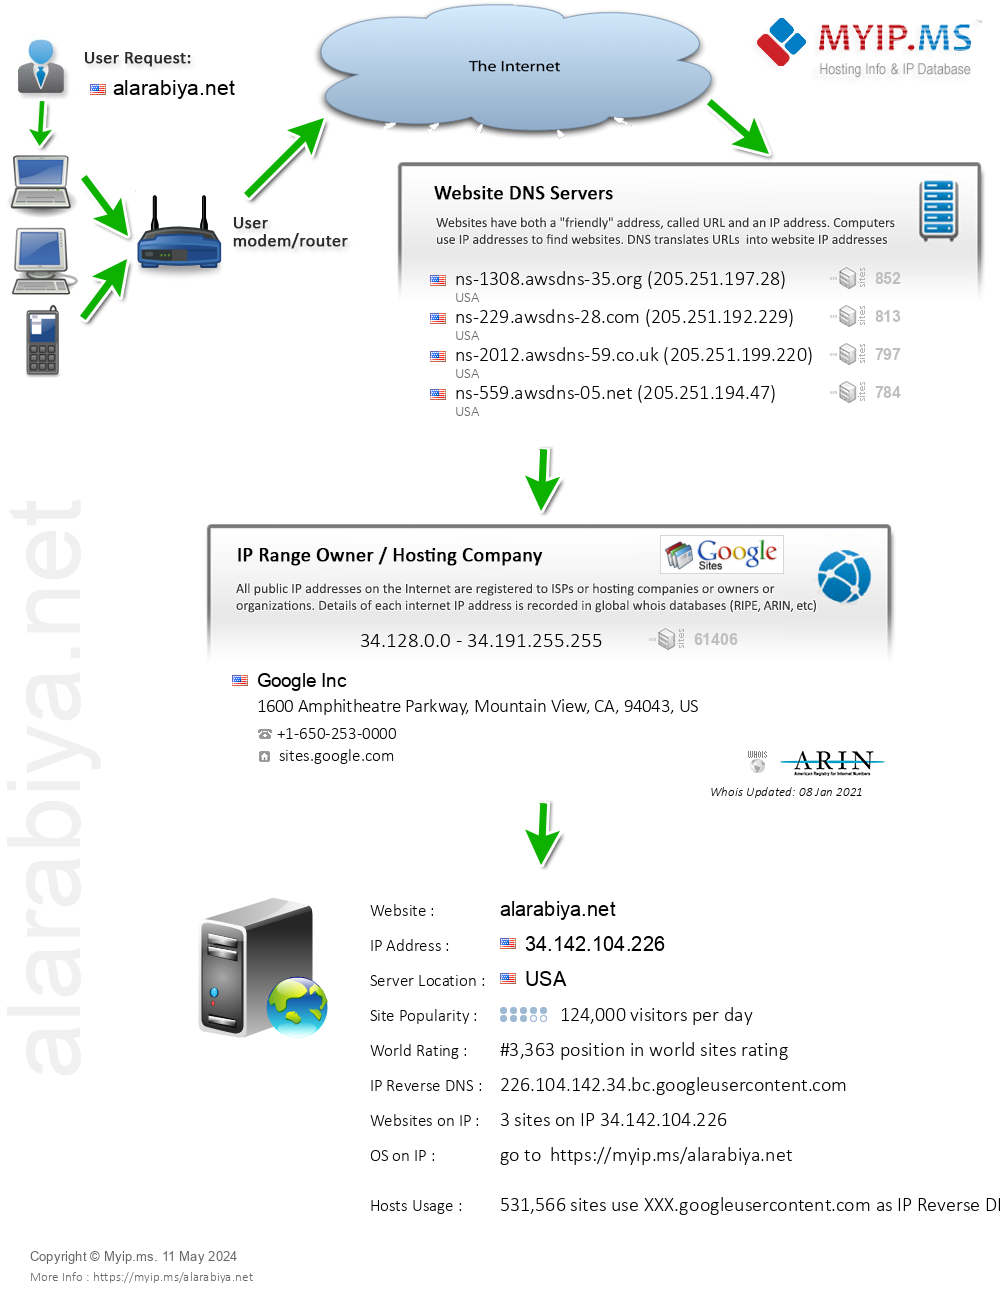 Alarabiya.net - Website Hosting Visual IP Diagram